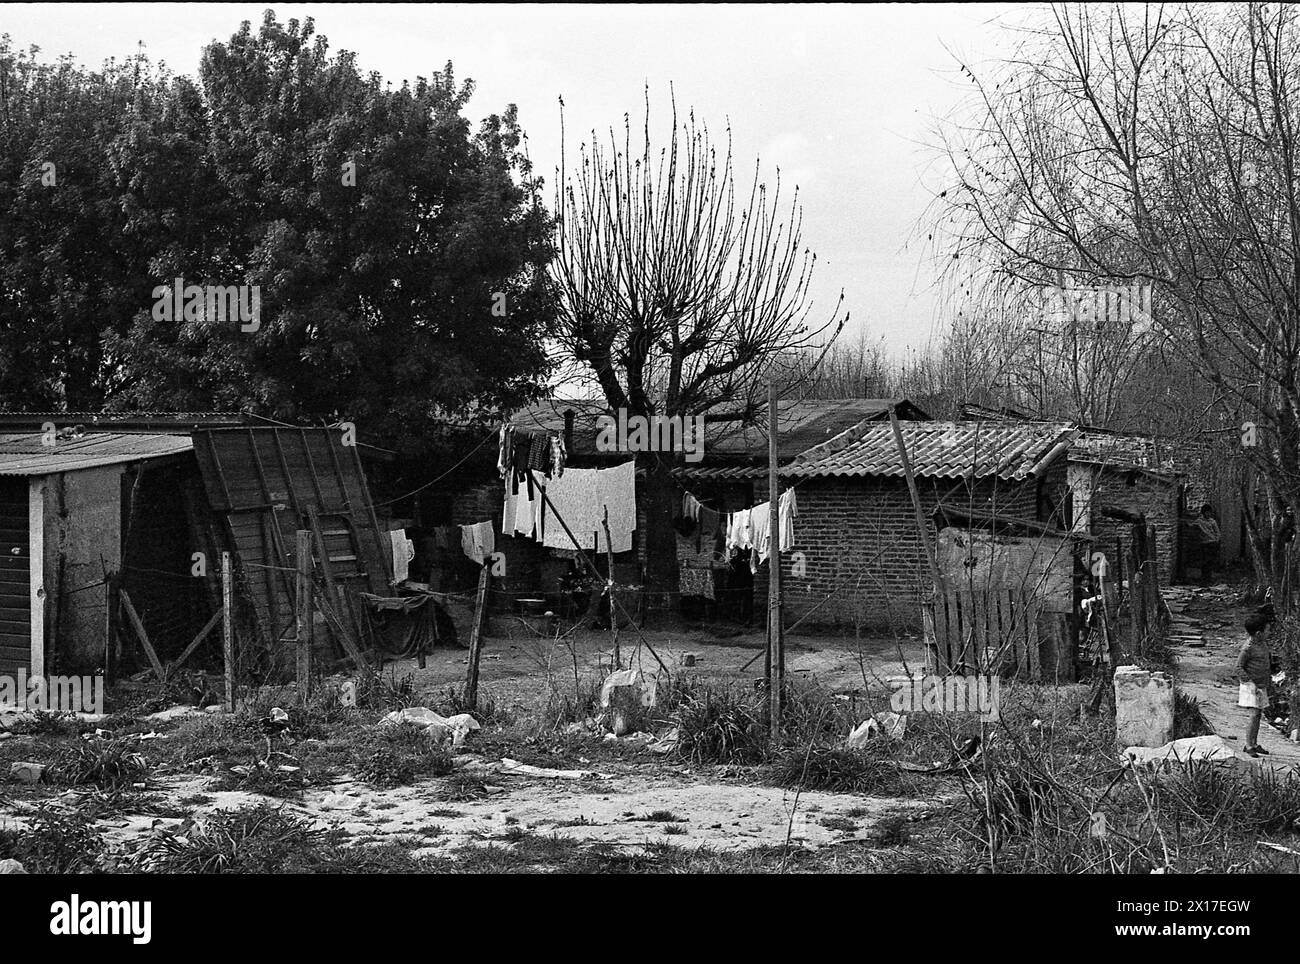 Barrio Lacarra, a Buenos Aires poor neighborhood or 'villa miseria' (misery village), August 6th, 1971. Stock Photo